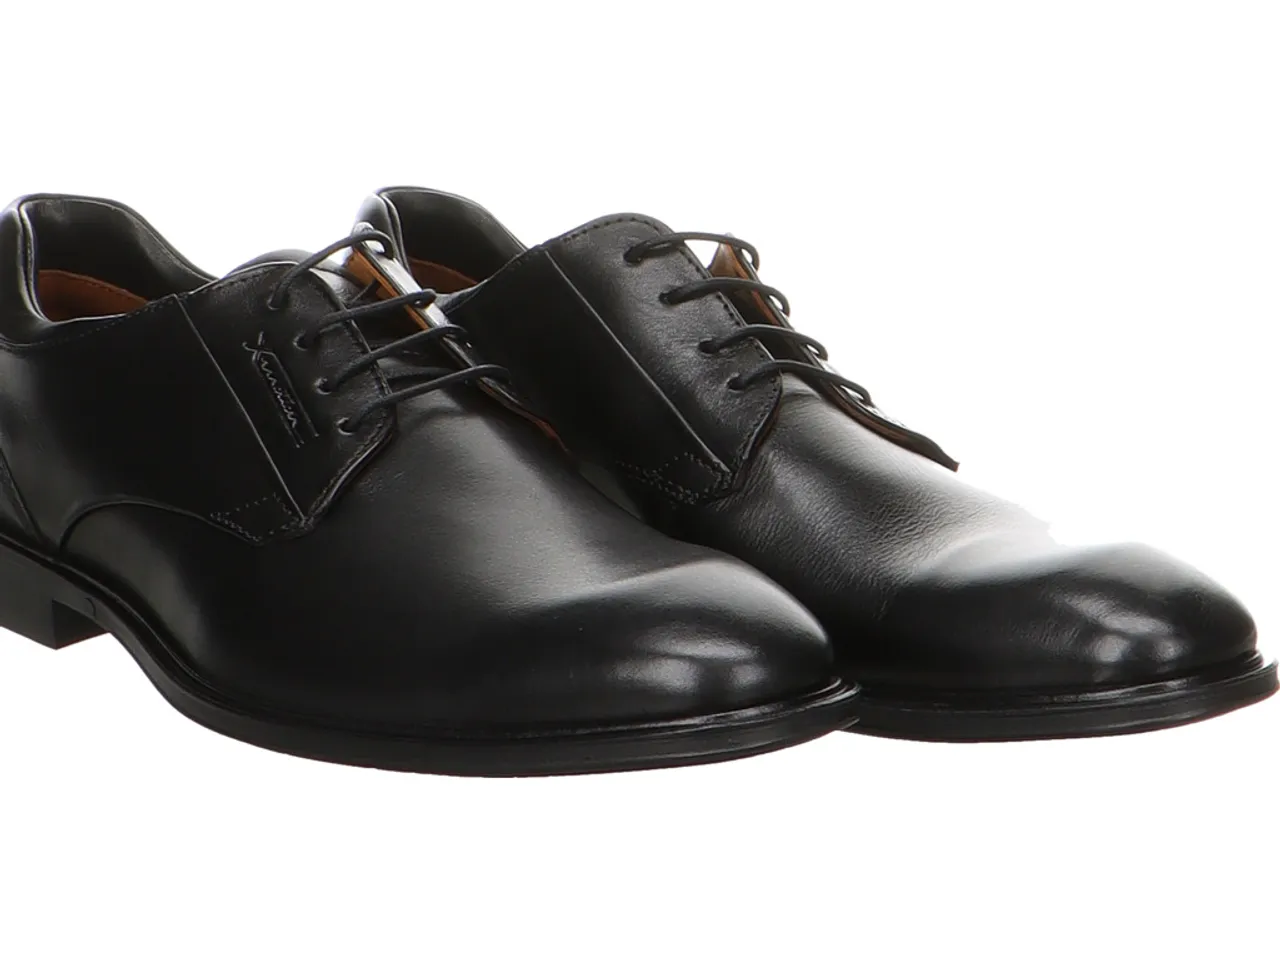 Business Schuhe schwarz 40,5